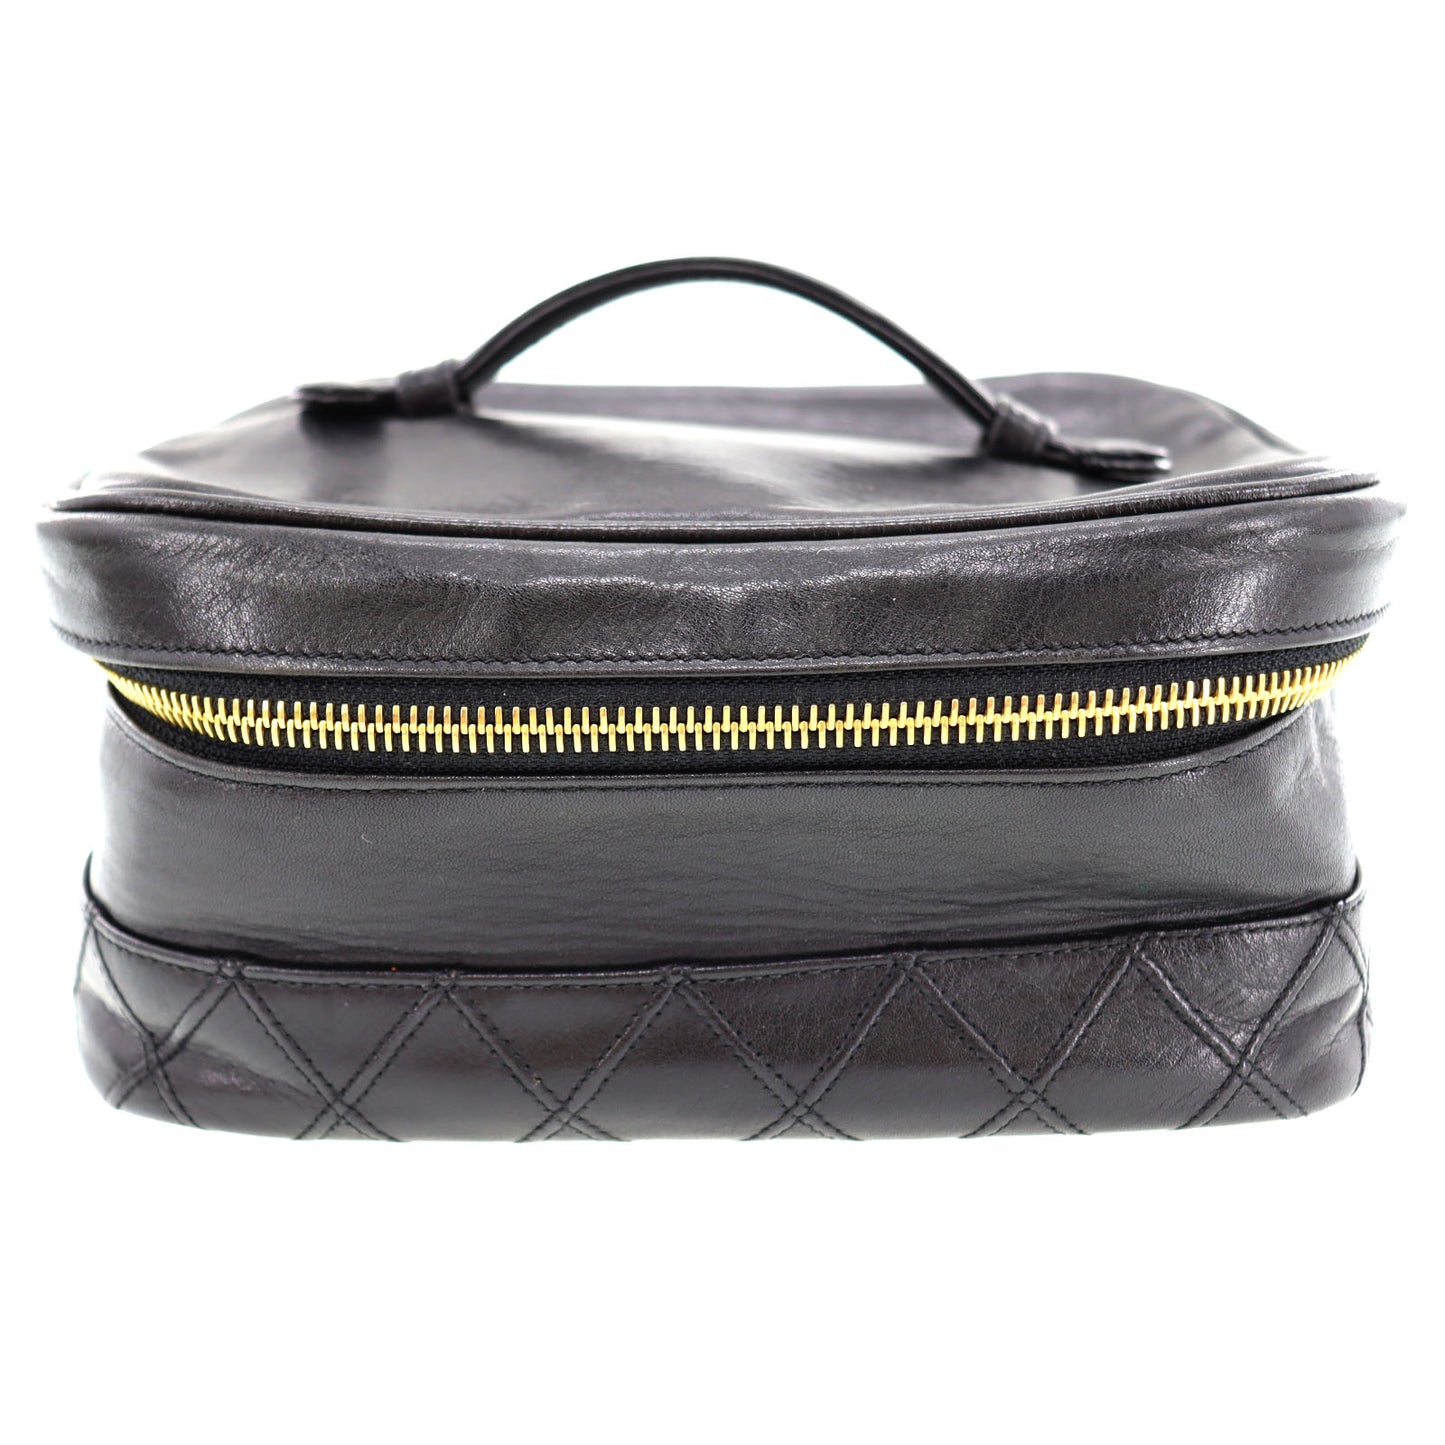 CHANEL Bicolore Handbag Vanity Pouch Black Lambskin #AH600